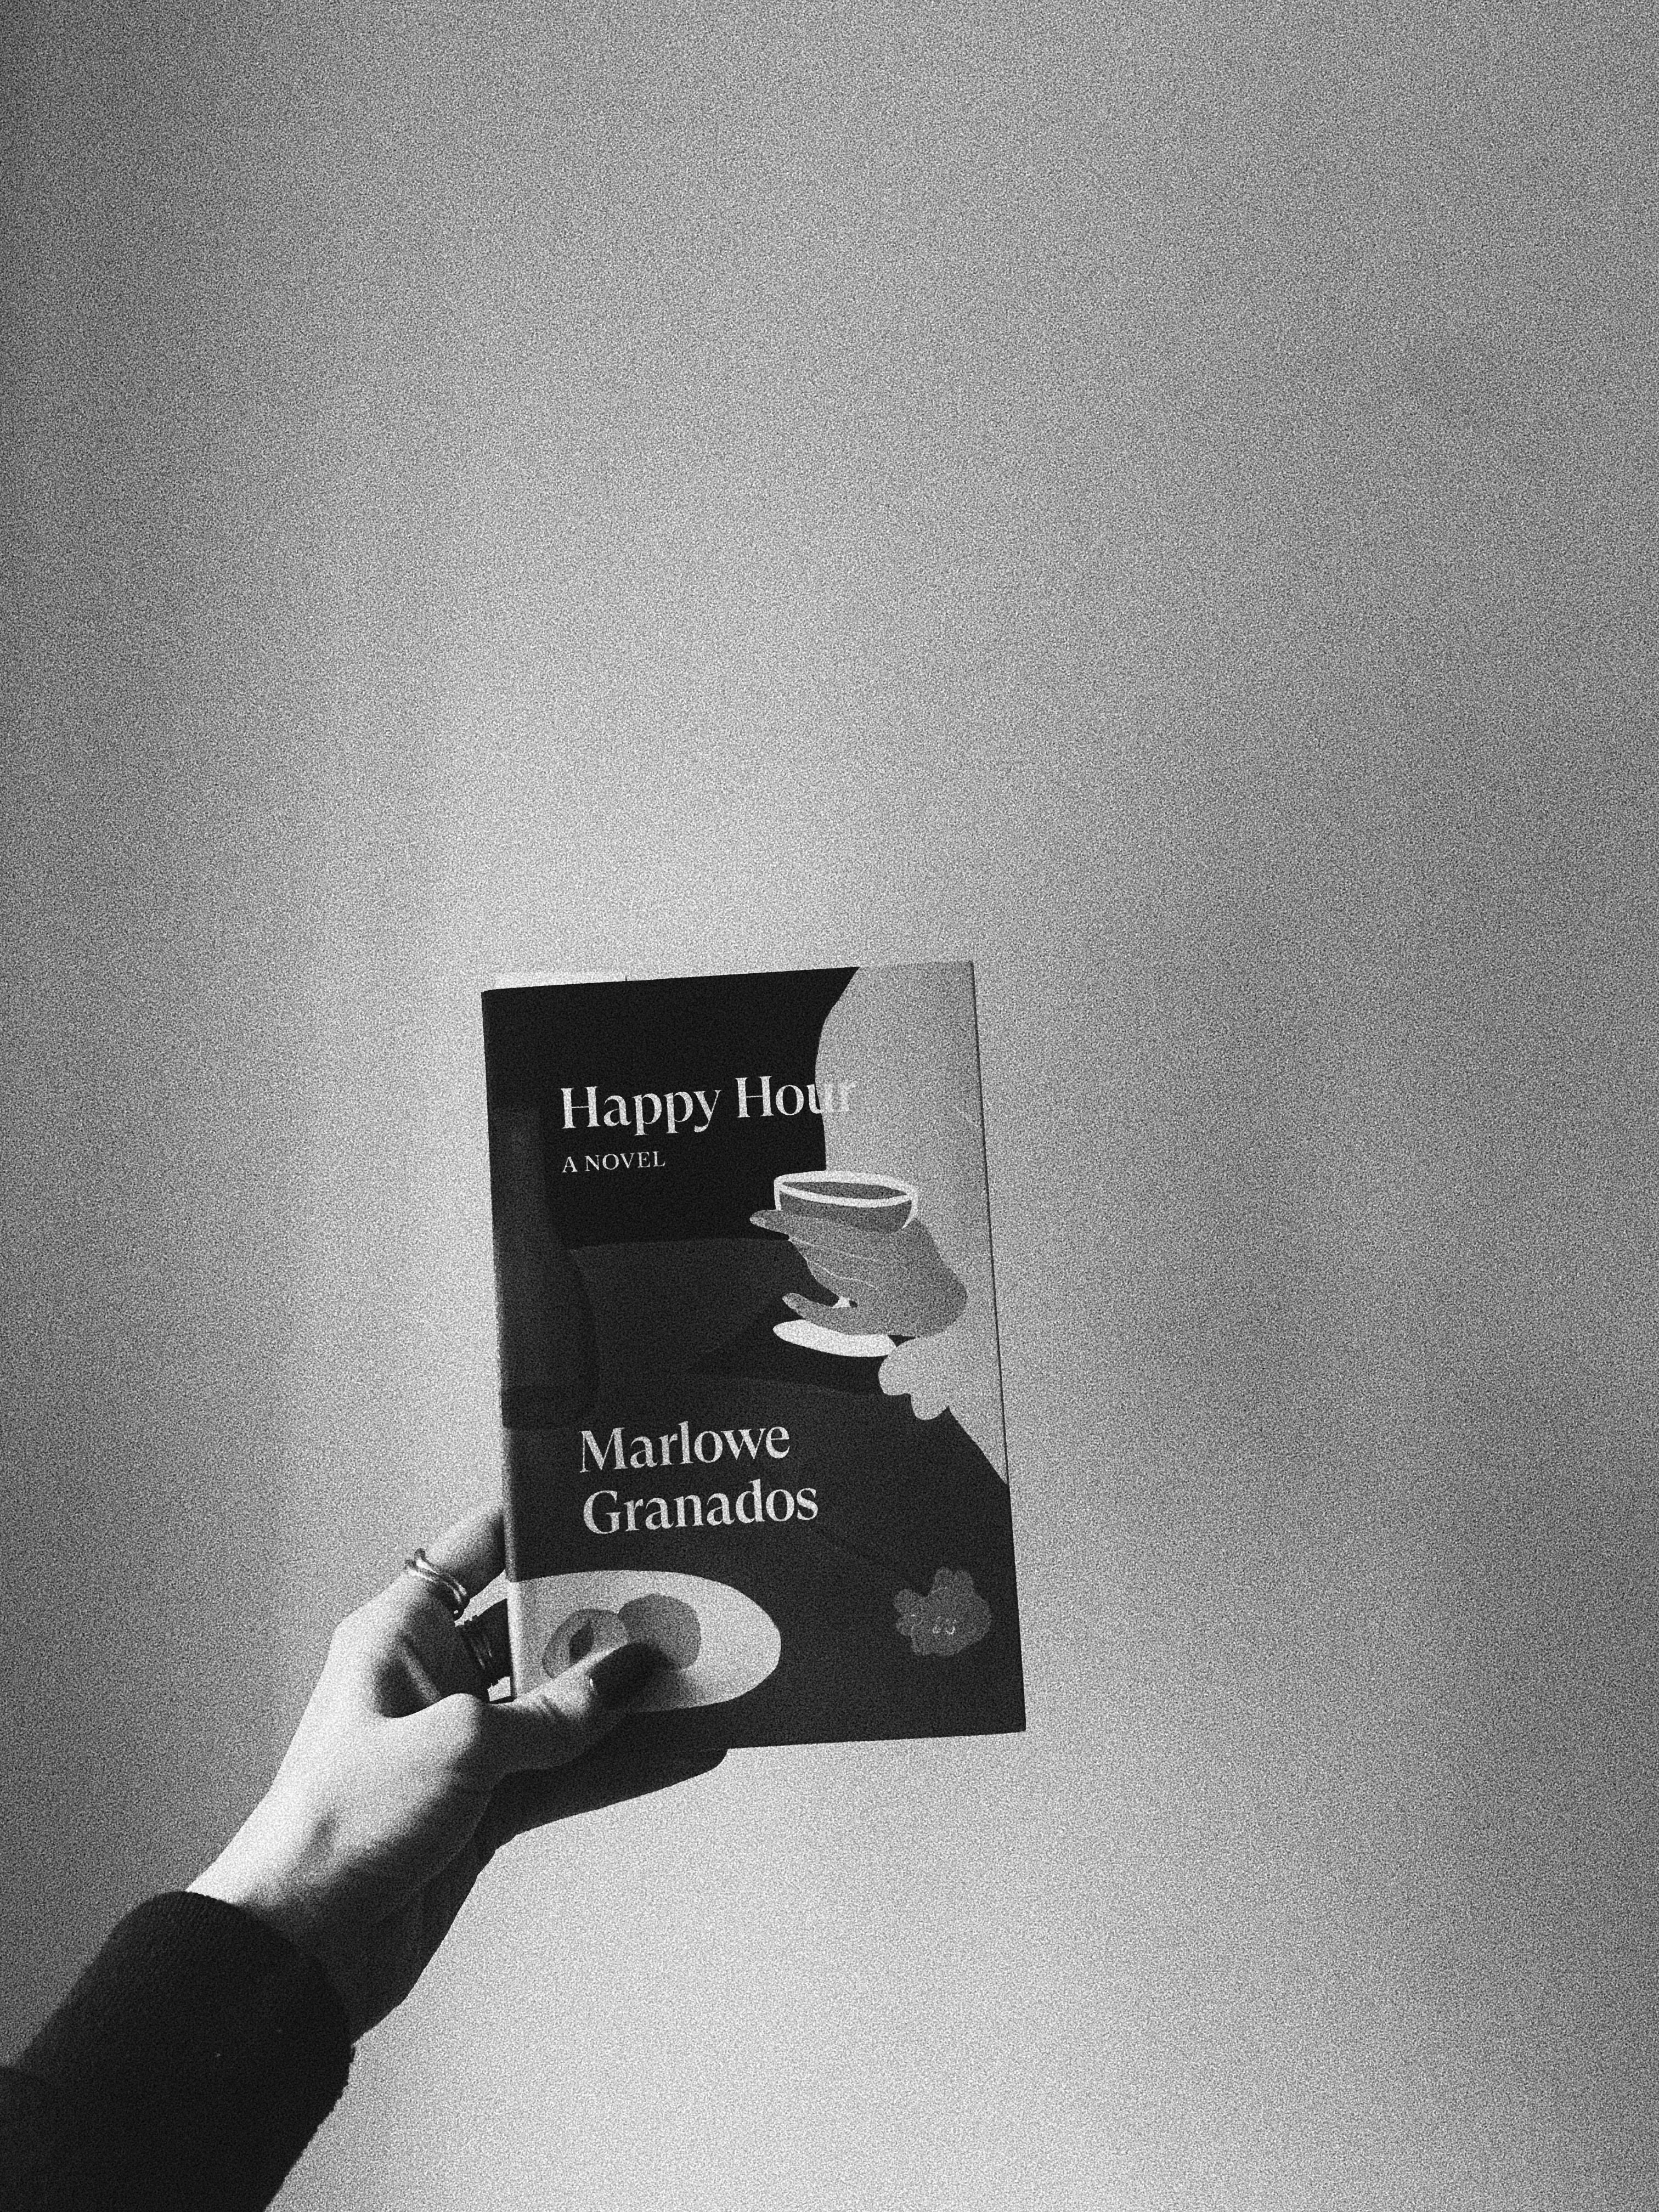 image of Happy Hour book by Marlowe Granados